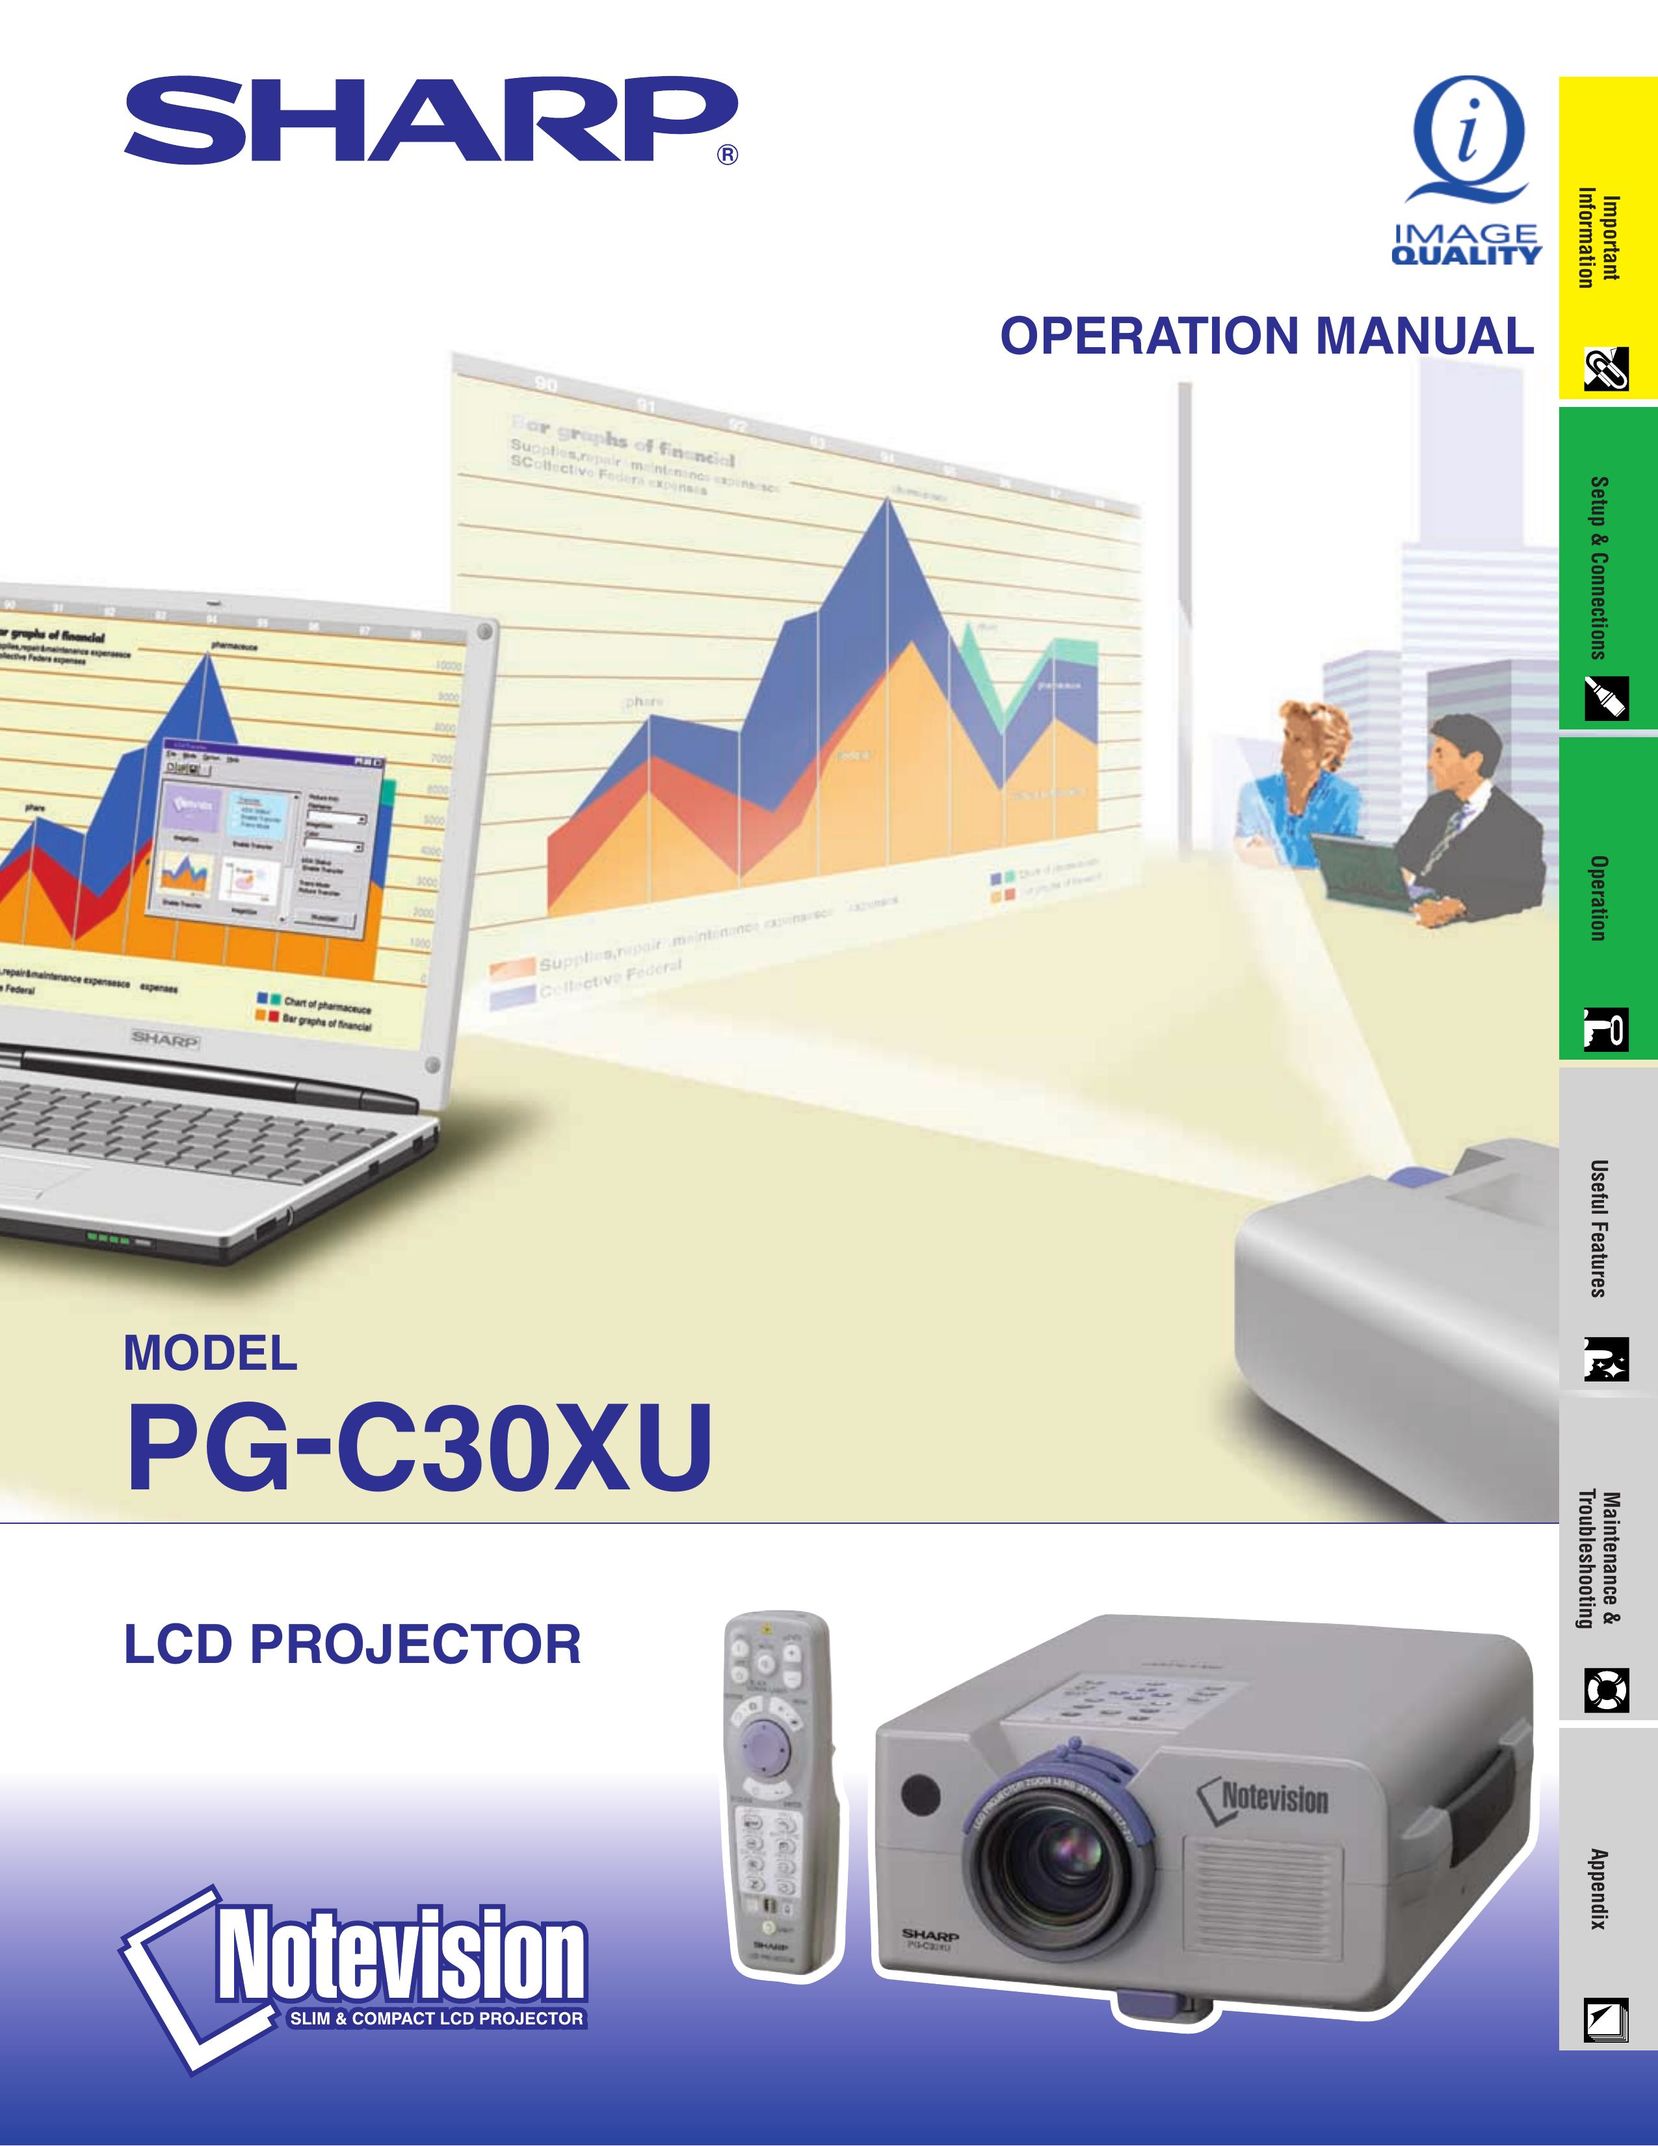 Sharp PG-C30XU Projector User Manual